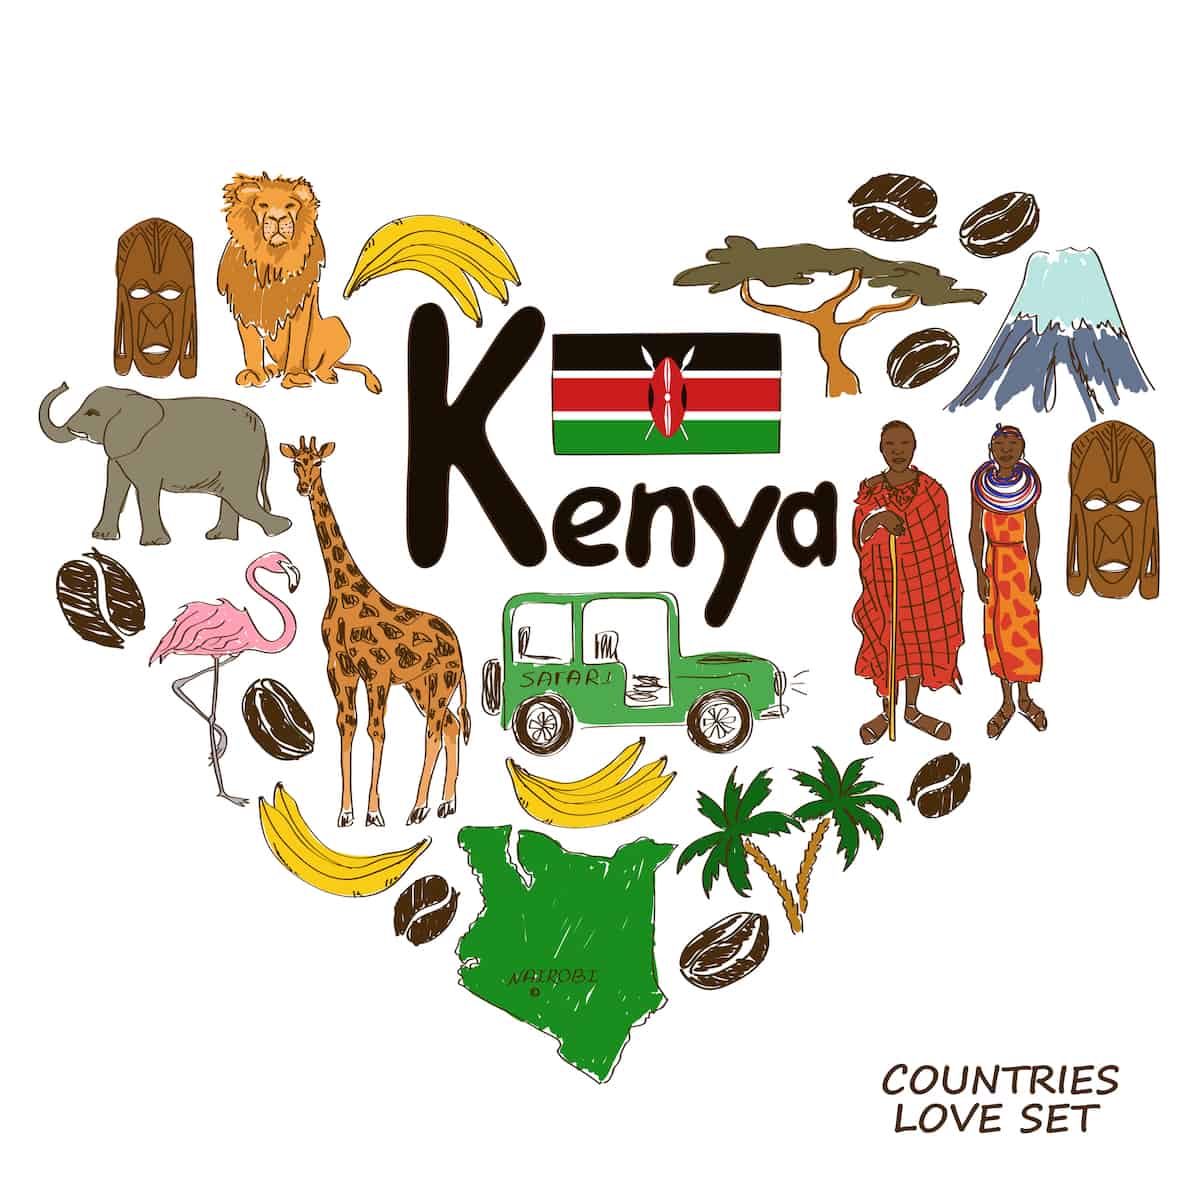 Kenyan symbols in heart shape concept